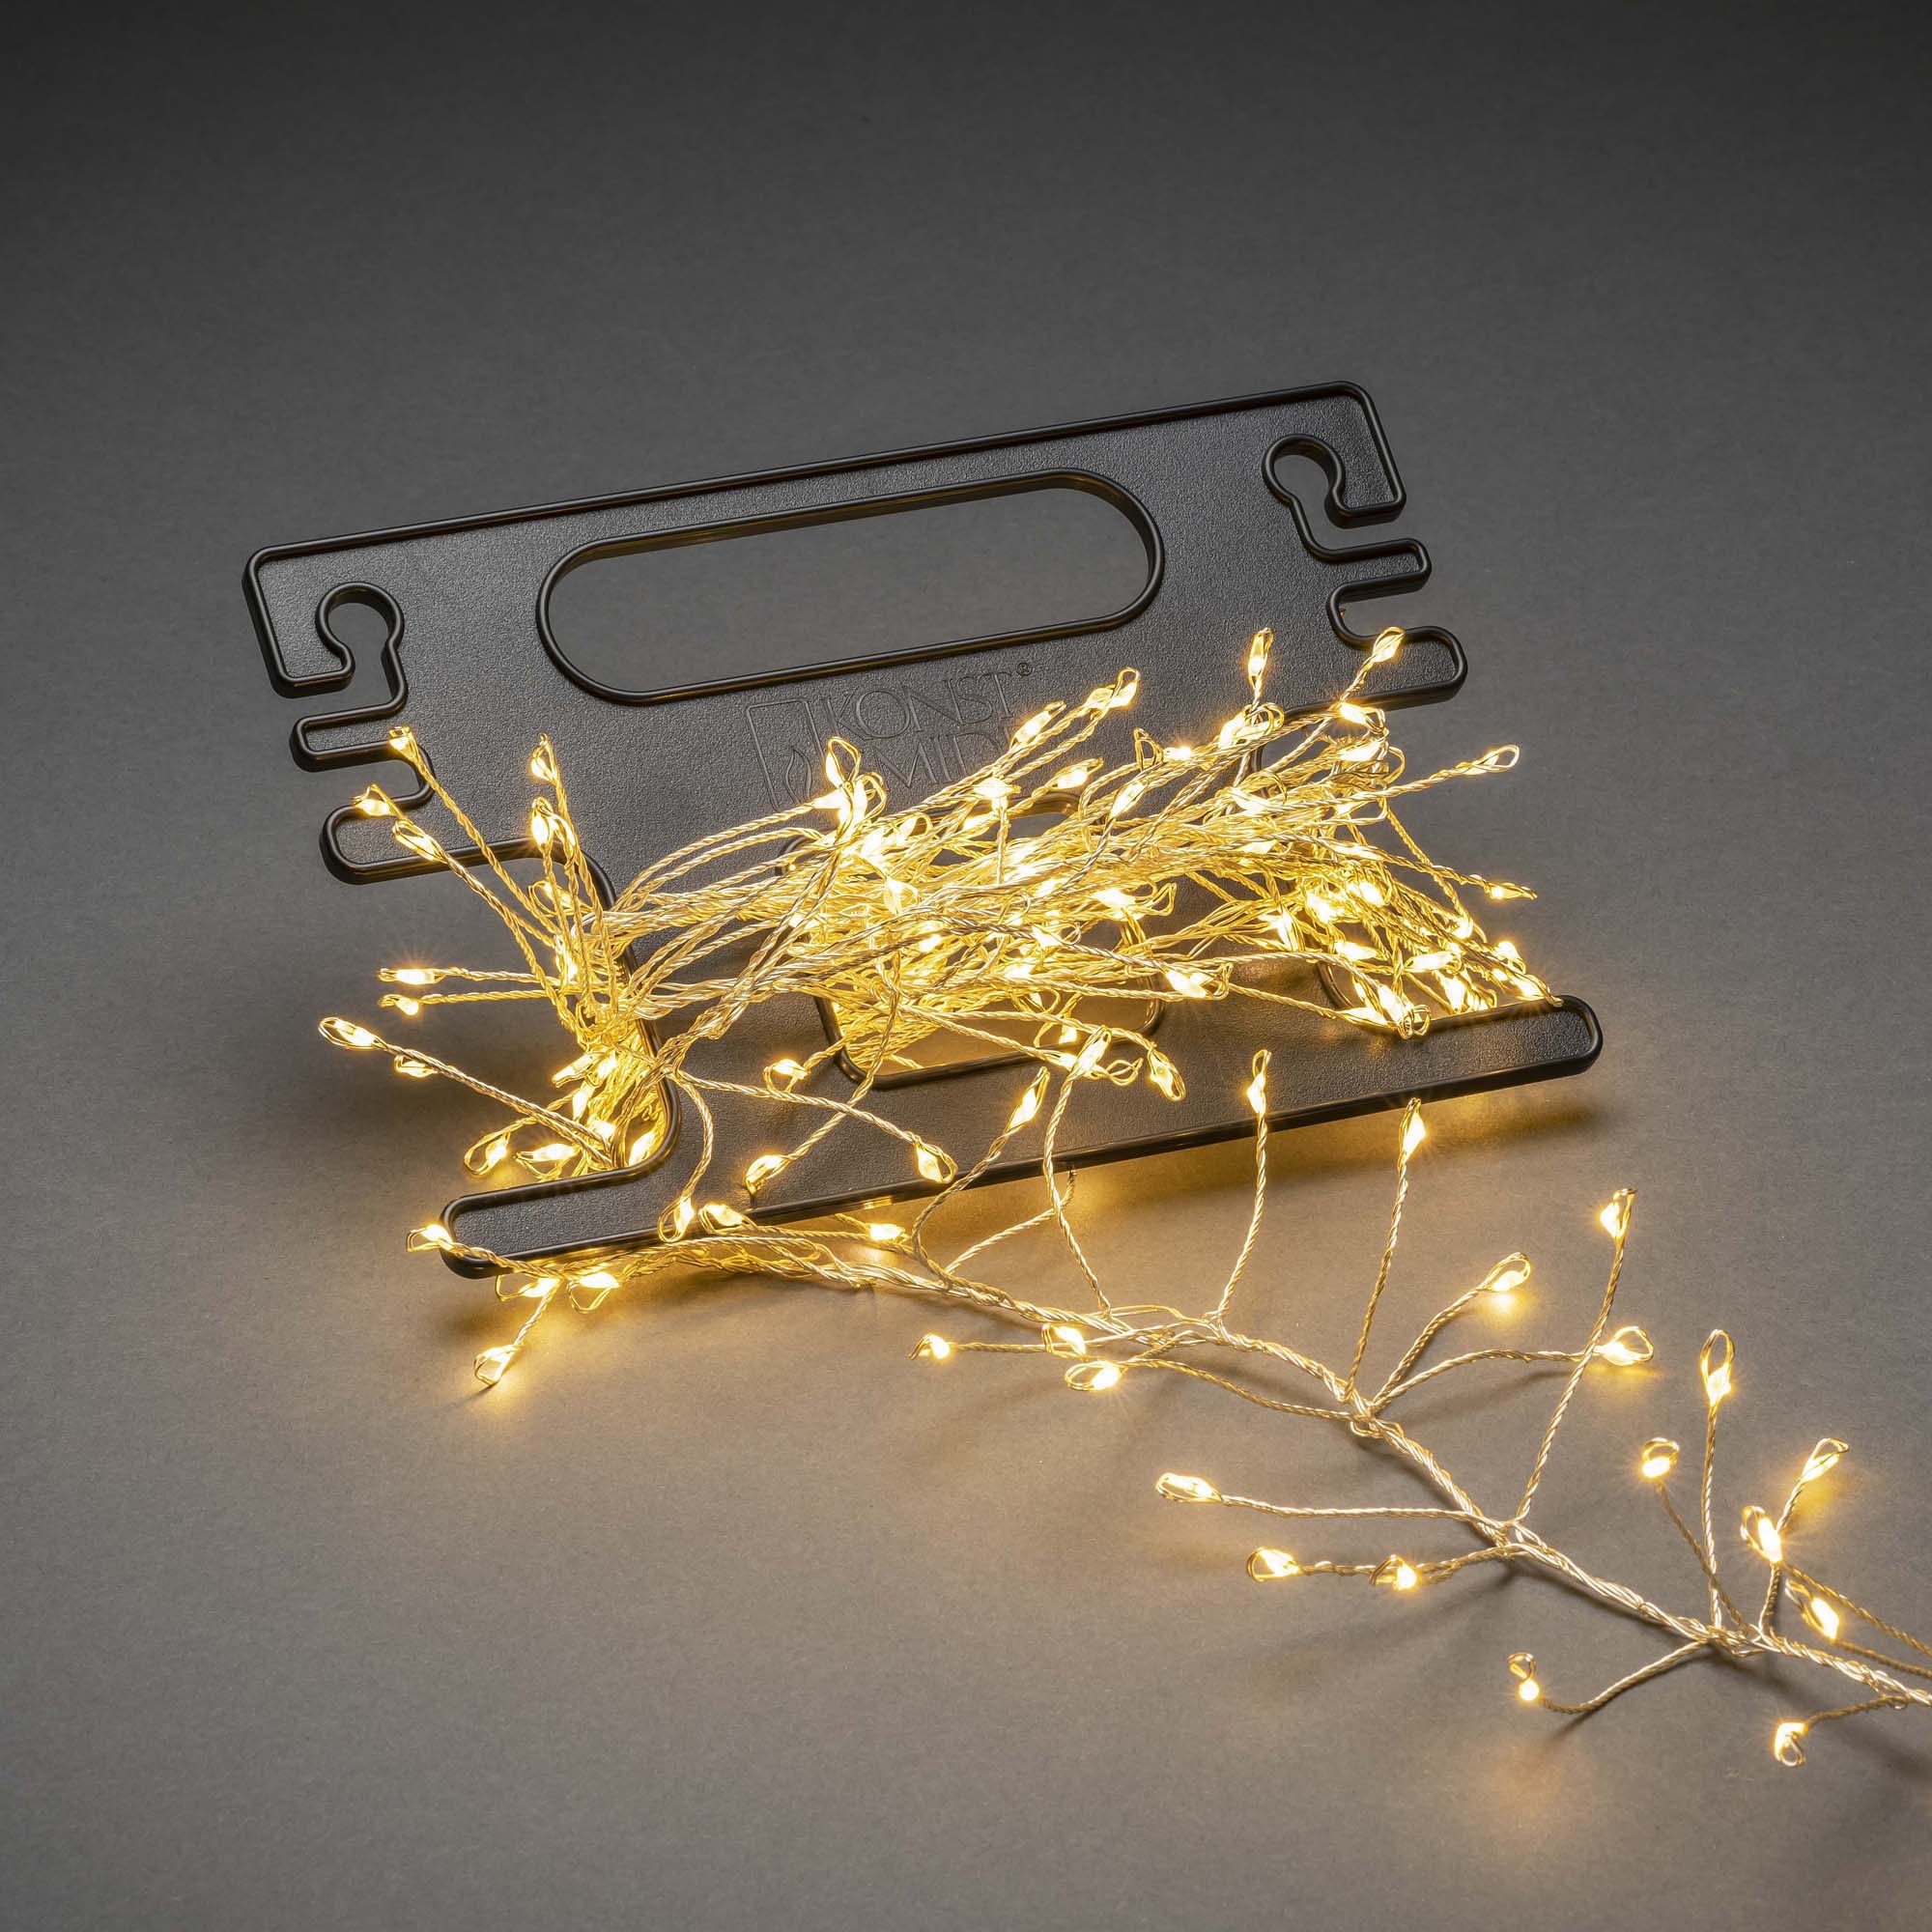 Konstsmide LED Light Chain Cluster amber 8.6m 400 LEDs silver